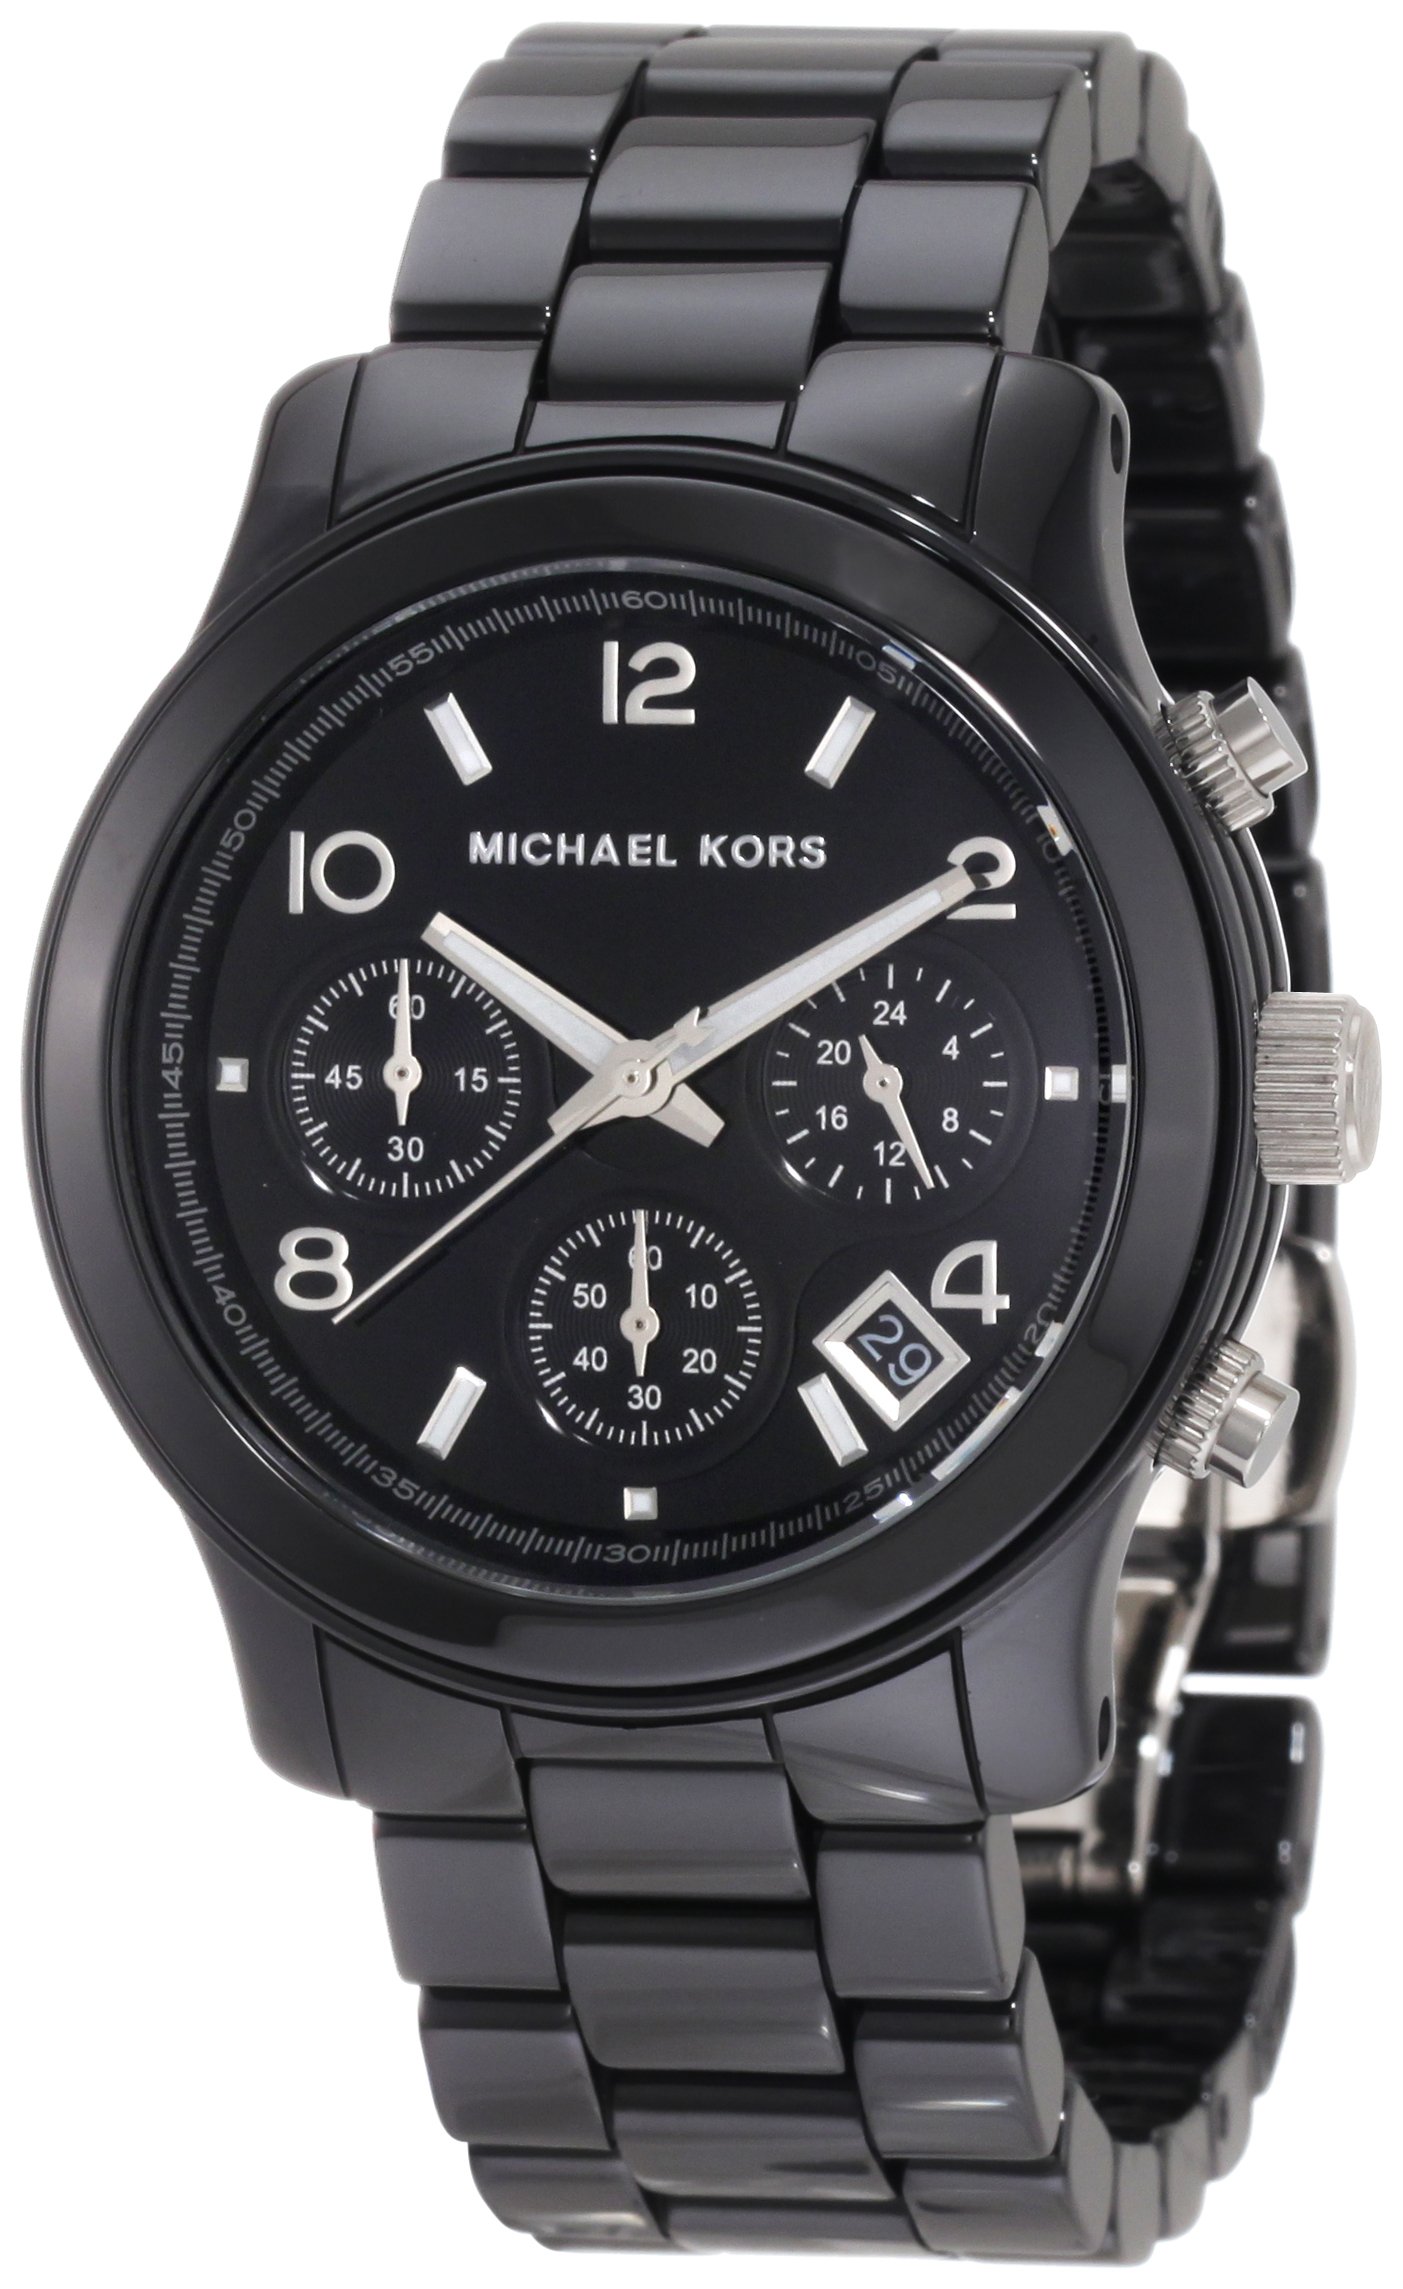 Michael Kors Women's MK5162 Black Ceramic Runway Watch